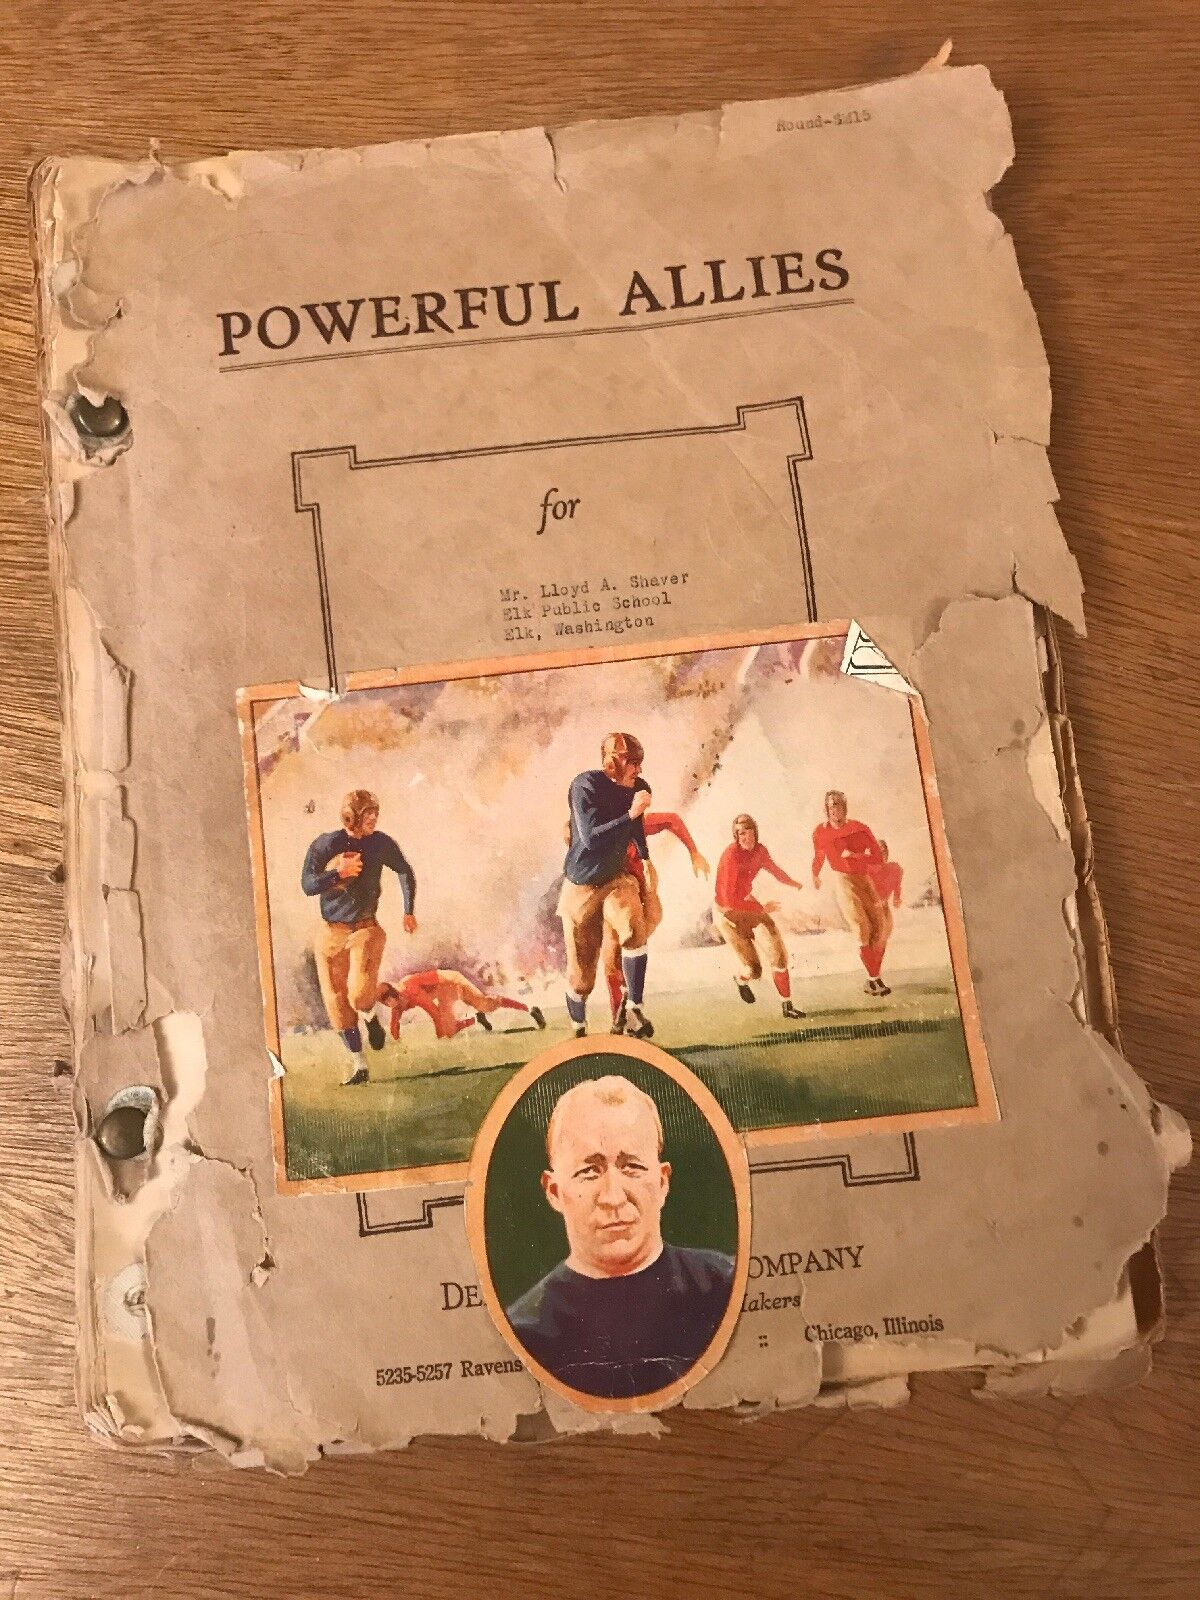 *VERY RARE* 1920s Antique Football & Basketball Coaching Notes Scrapbook Vintage